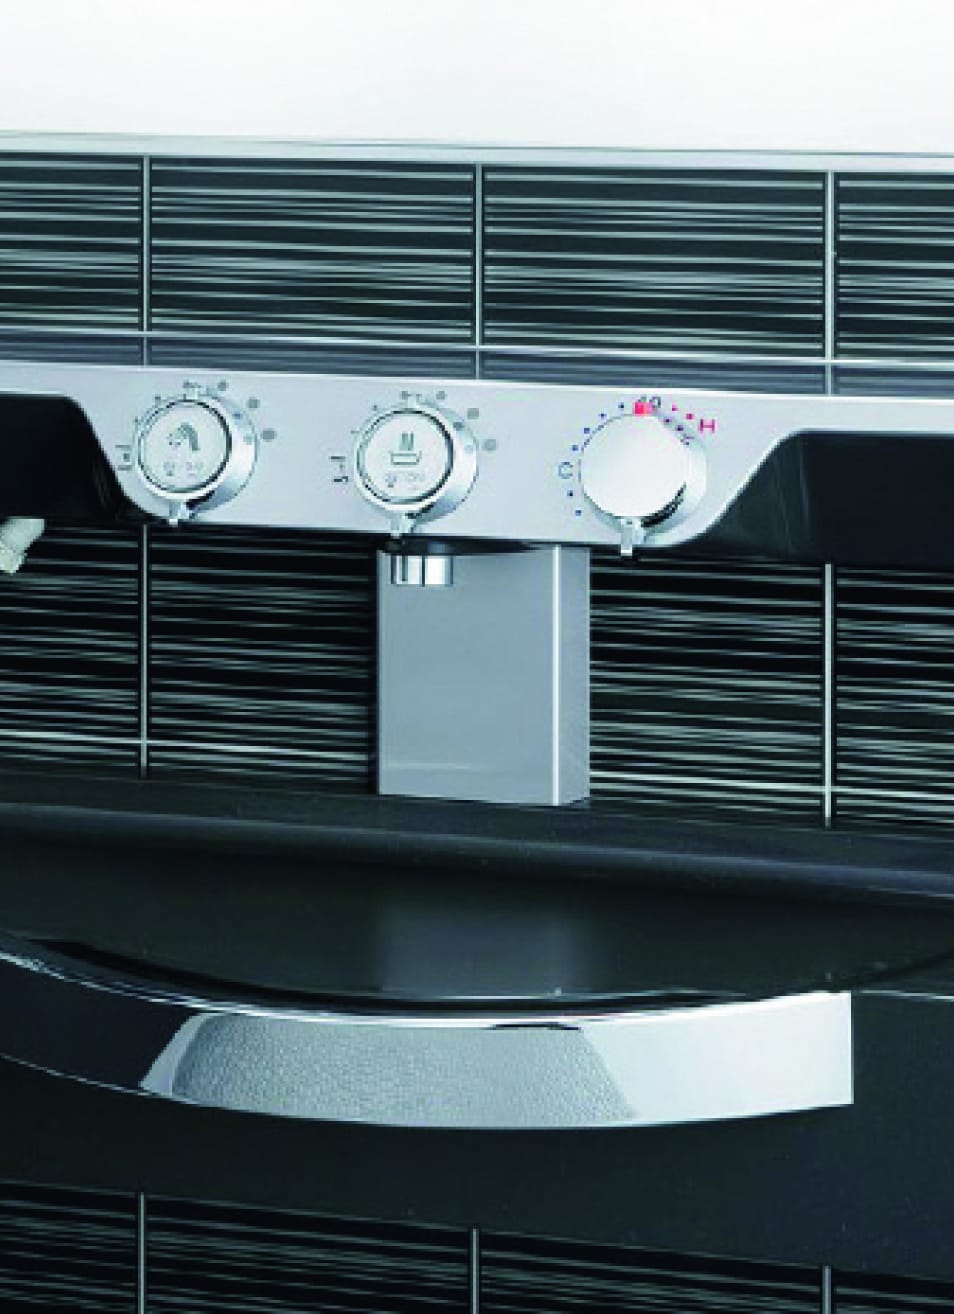 Development of push button faucet for prefabricated bath.